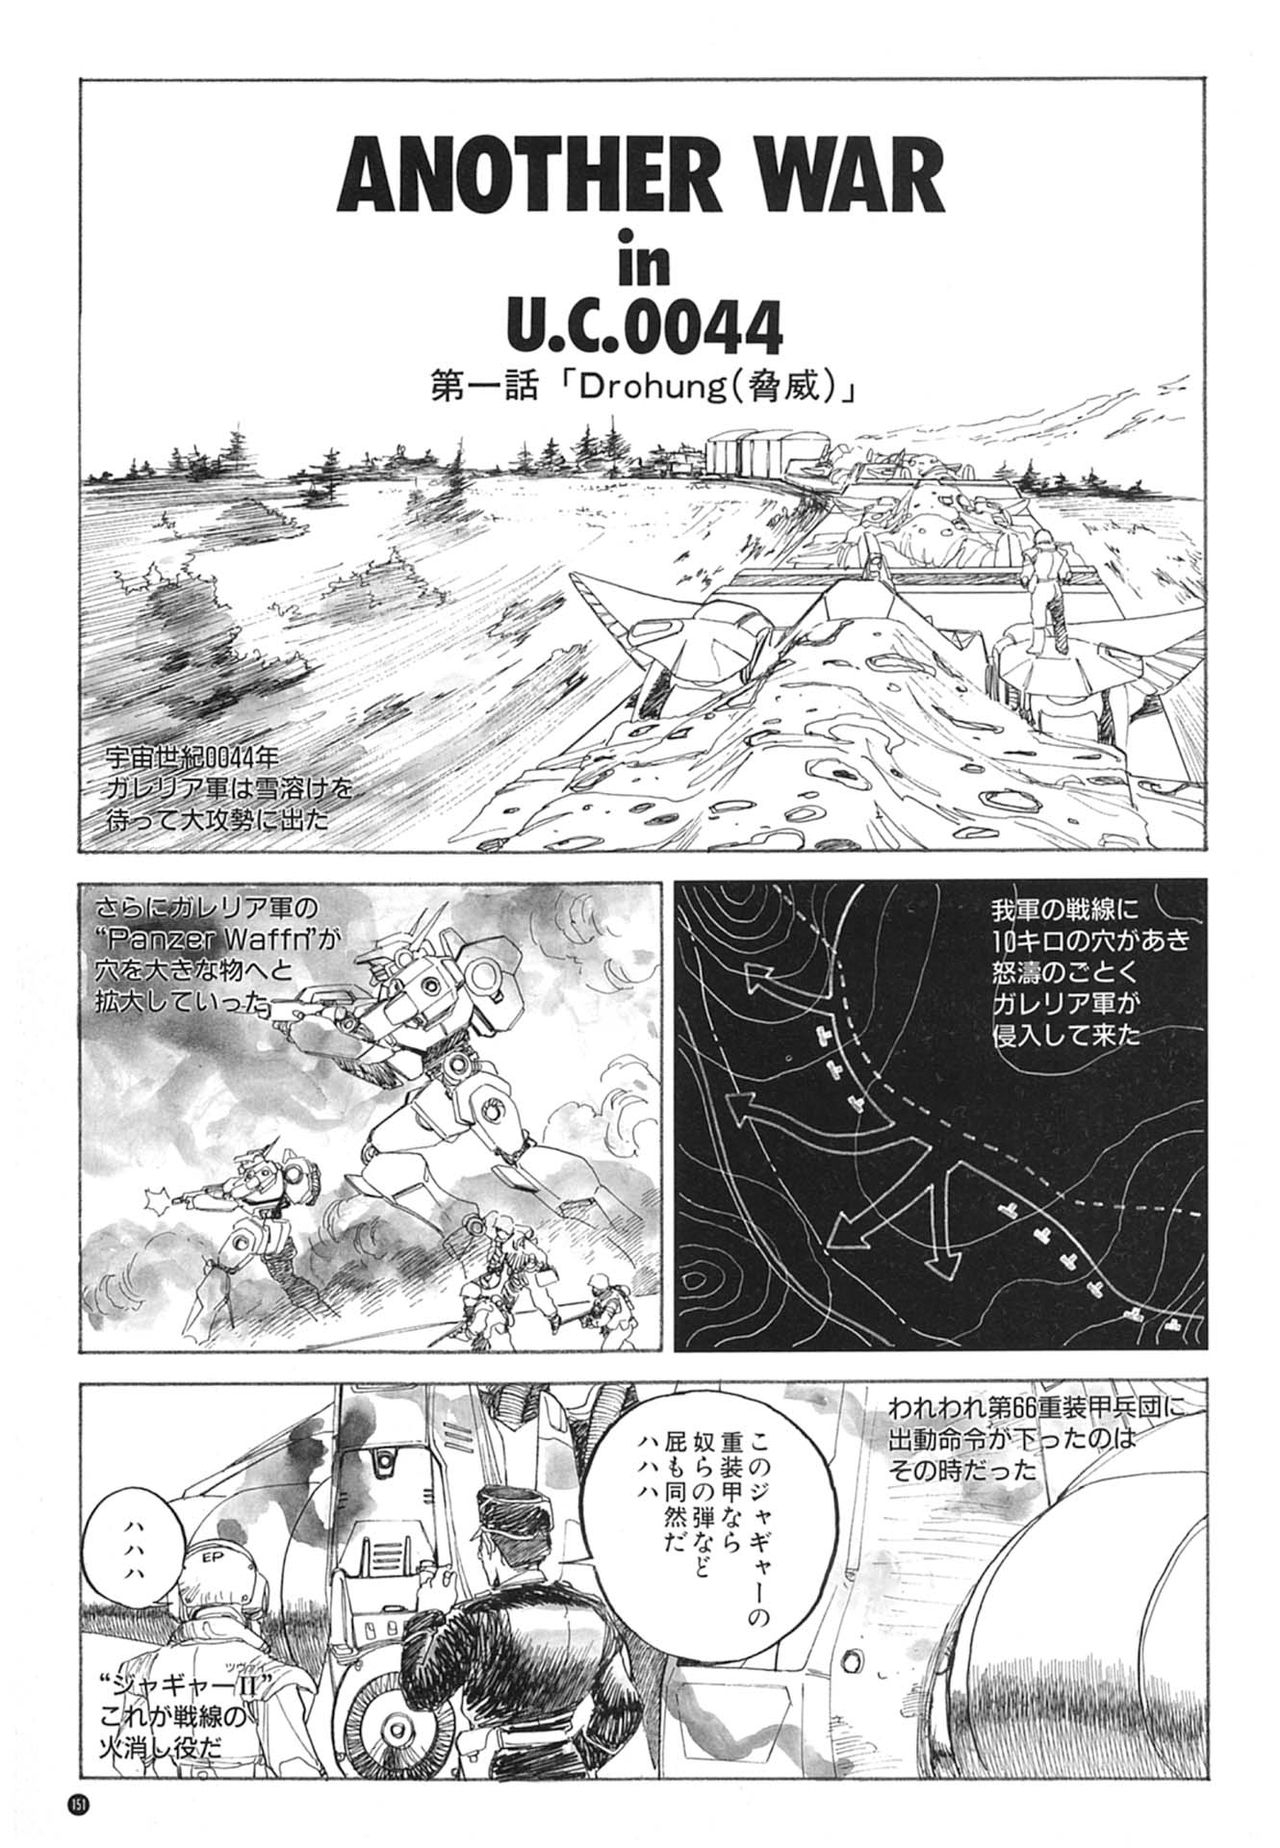 [Kazuhisa Kondo] Kazuhisa Kondo 2D & 3D Works - Go Ahead - From Mobile Suit Gundam to Original Mechanism 150